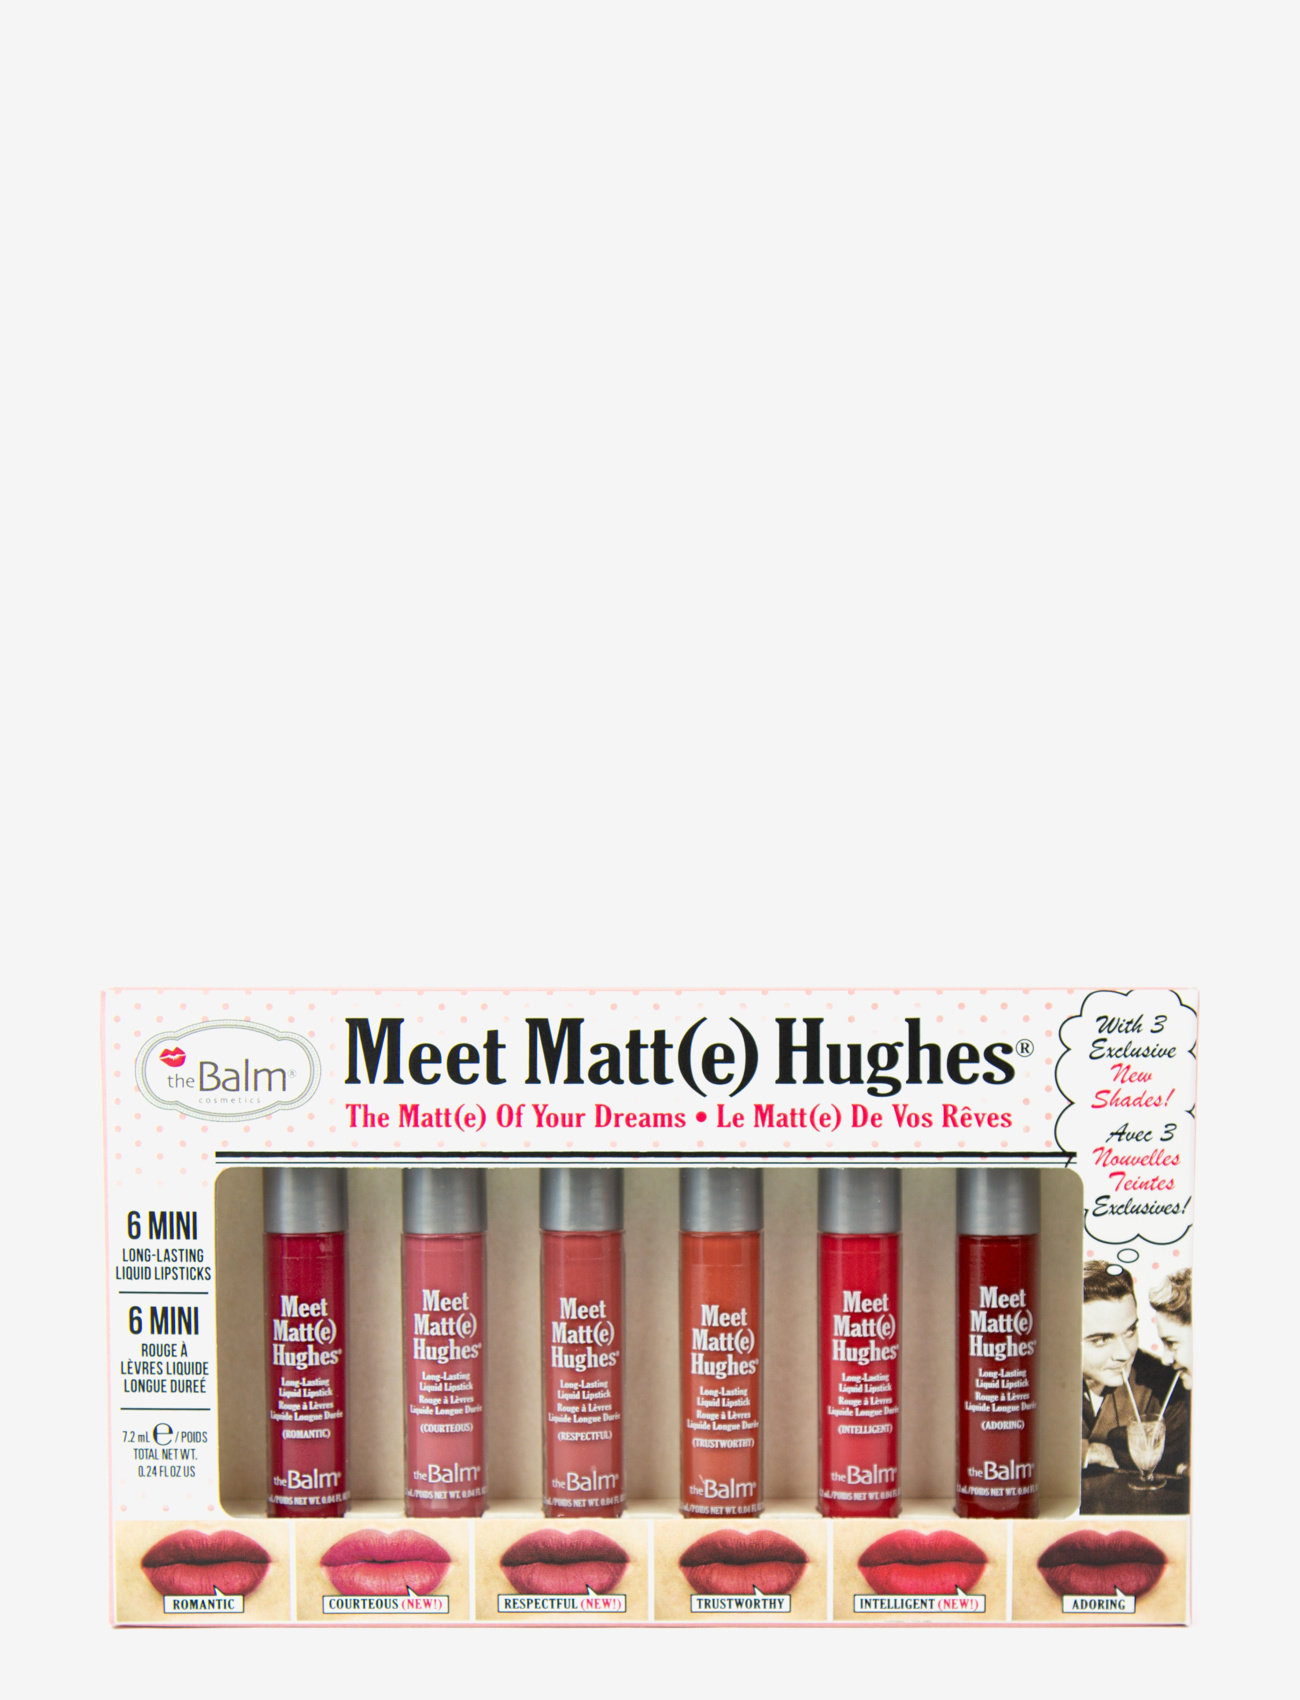 The Balm - Meet Matte Hughes Mini Kit #12 
(Adoring, Intelligent, Romantic, Courteous, Respectful, Trustworthy) - mellan 200-500 kr - meet matte hughes mini kit #12 - 0